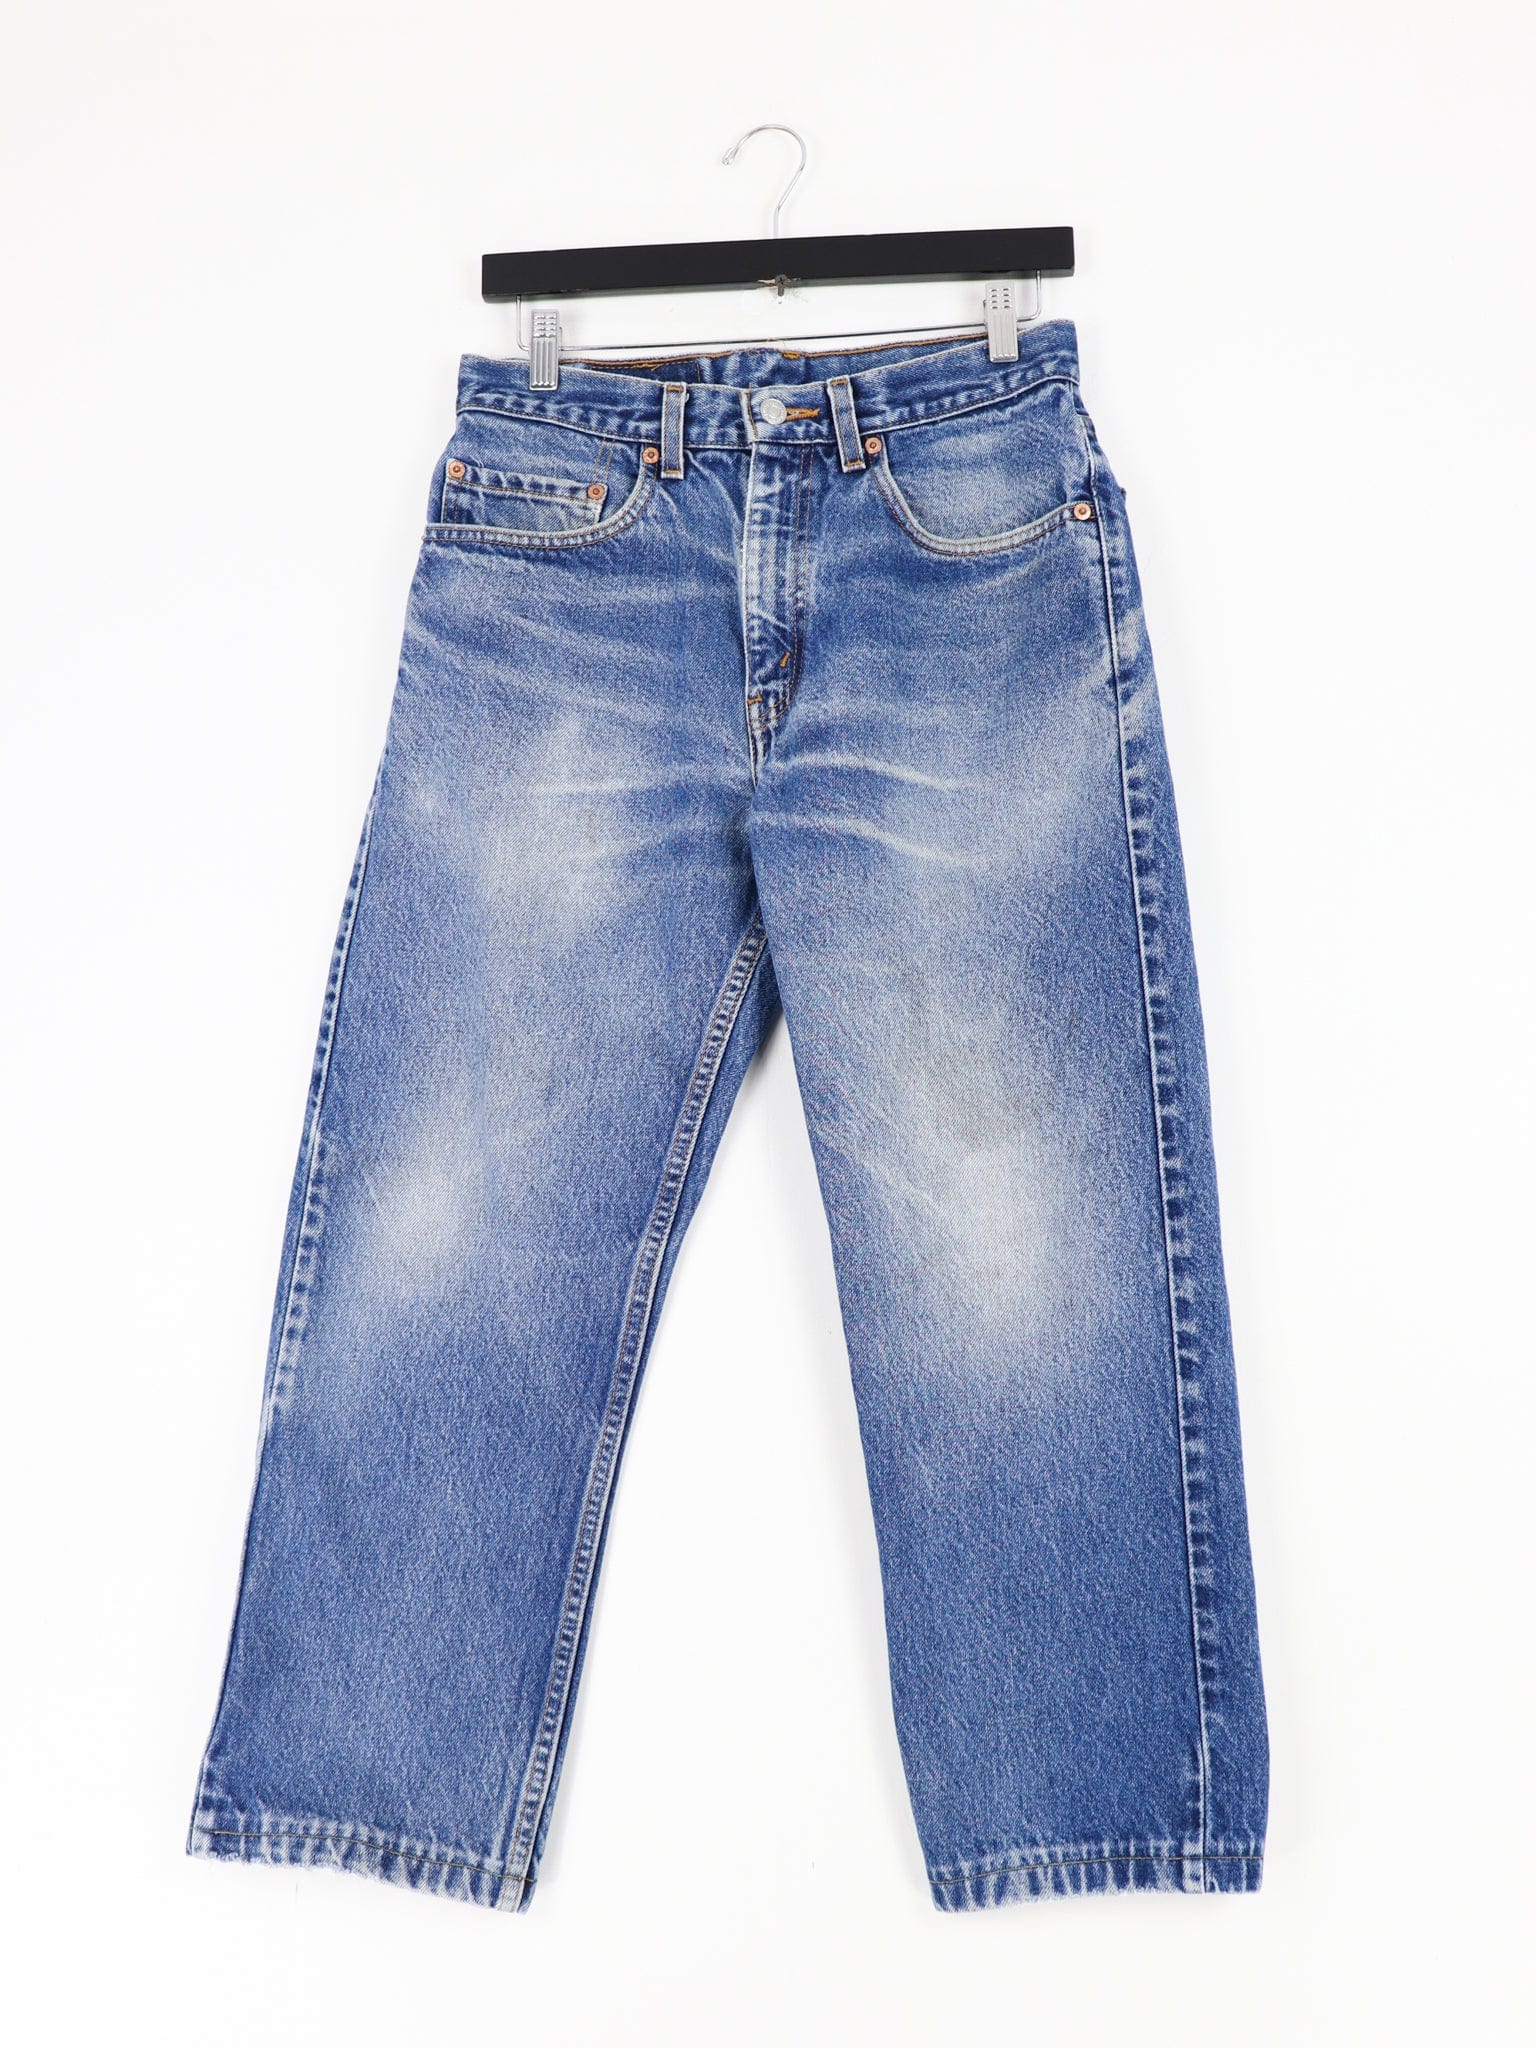 Vintage Levi's 505 Regular Straight Fit Denim Jeans Size 31 x 30 Fits